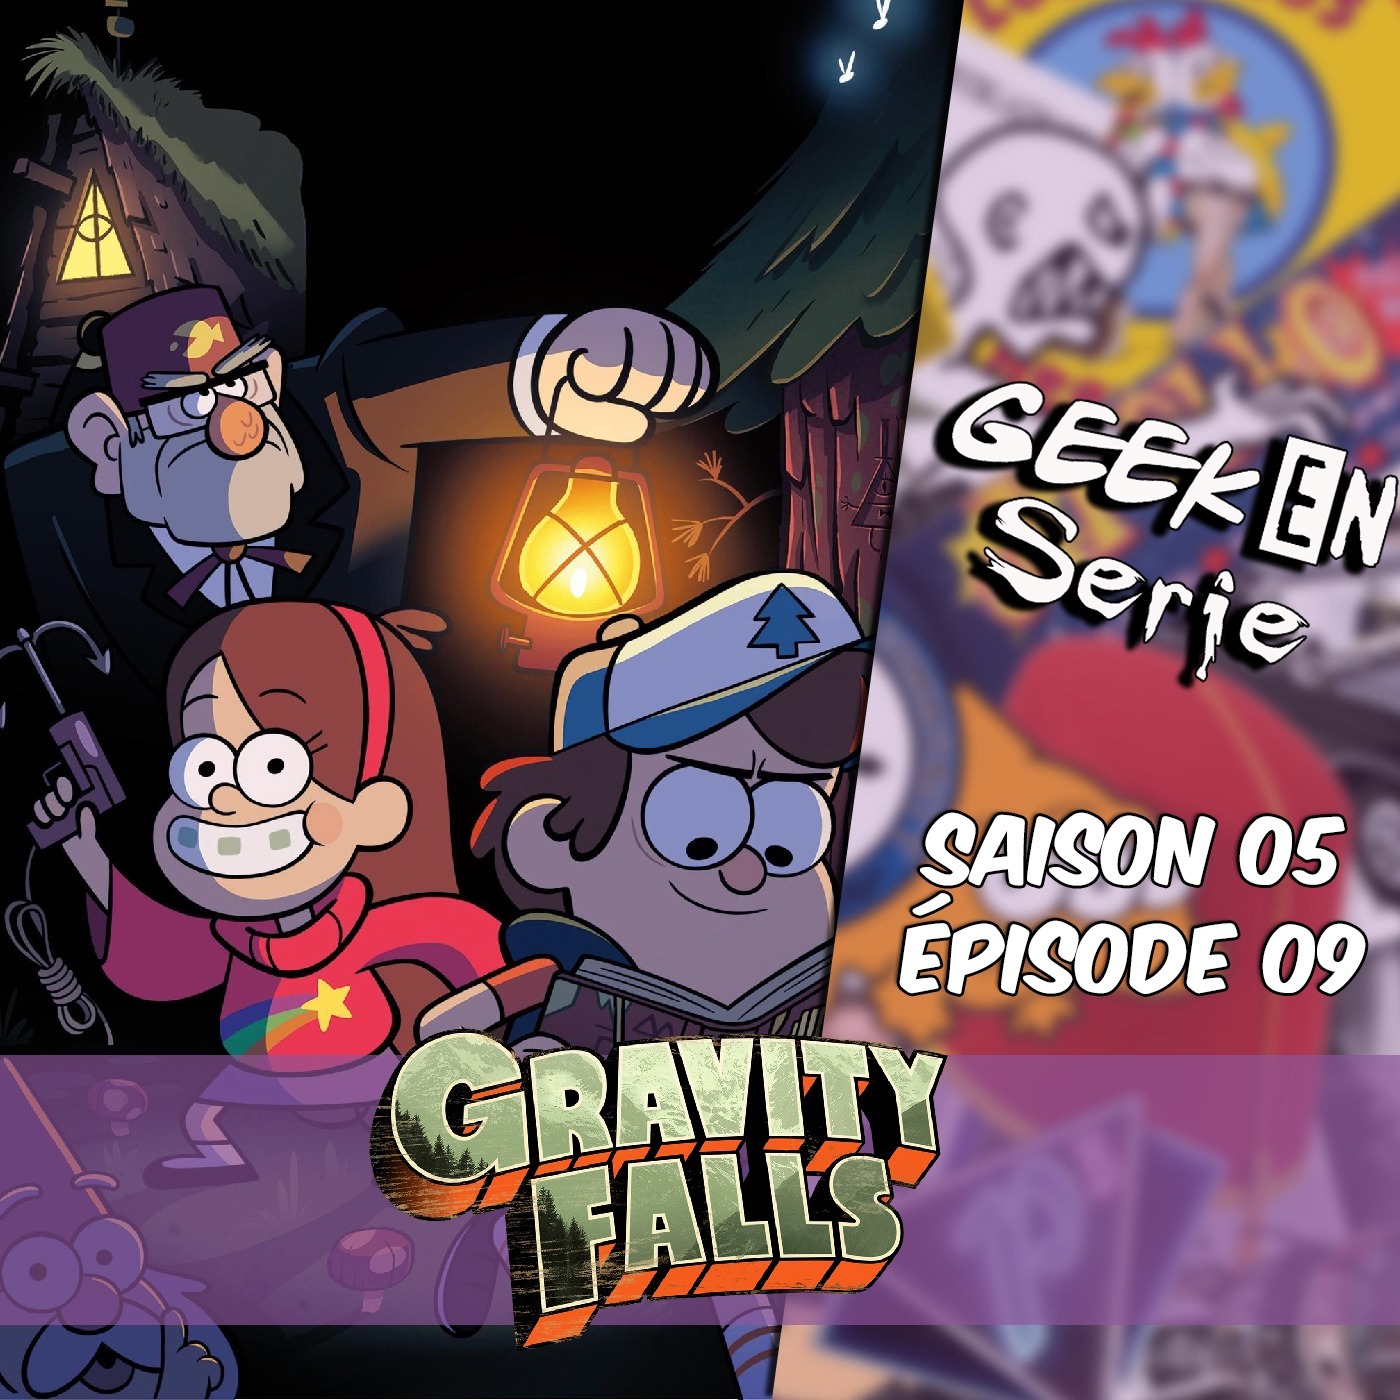 Geek en série 5x09: Gravity Falls